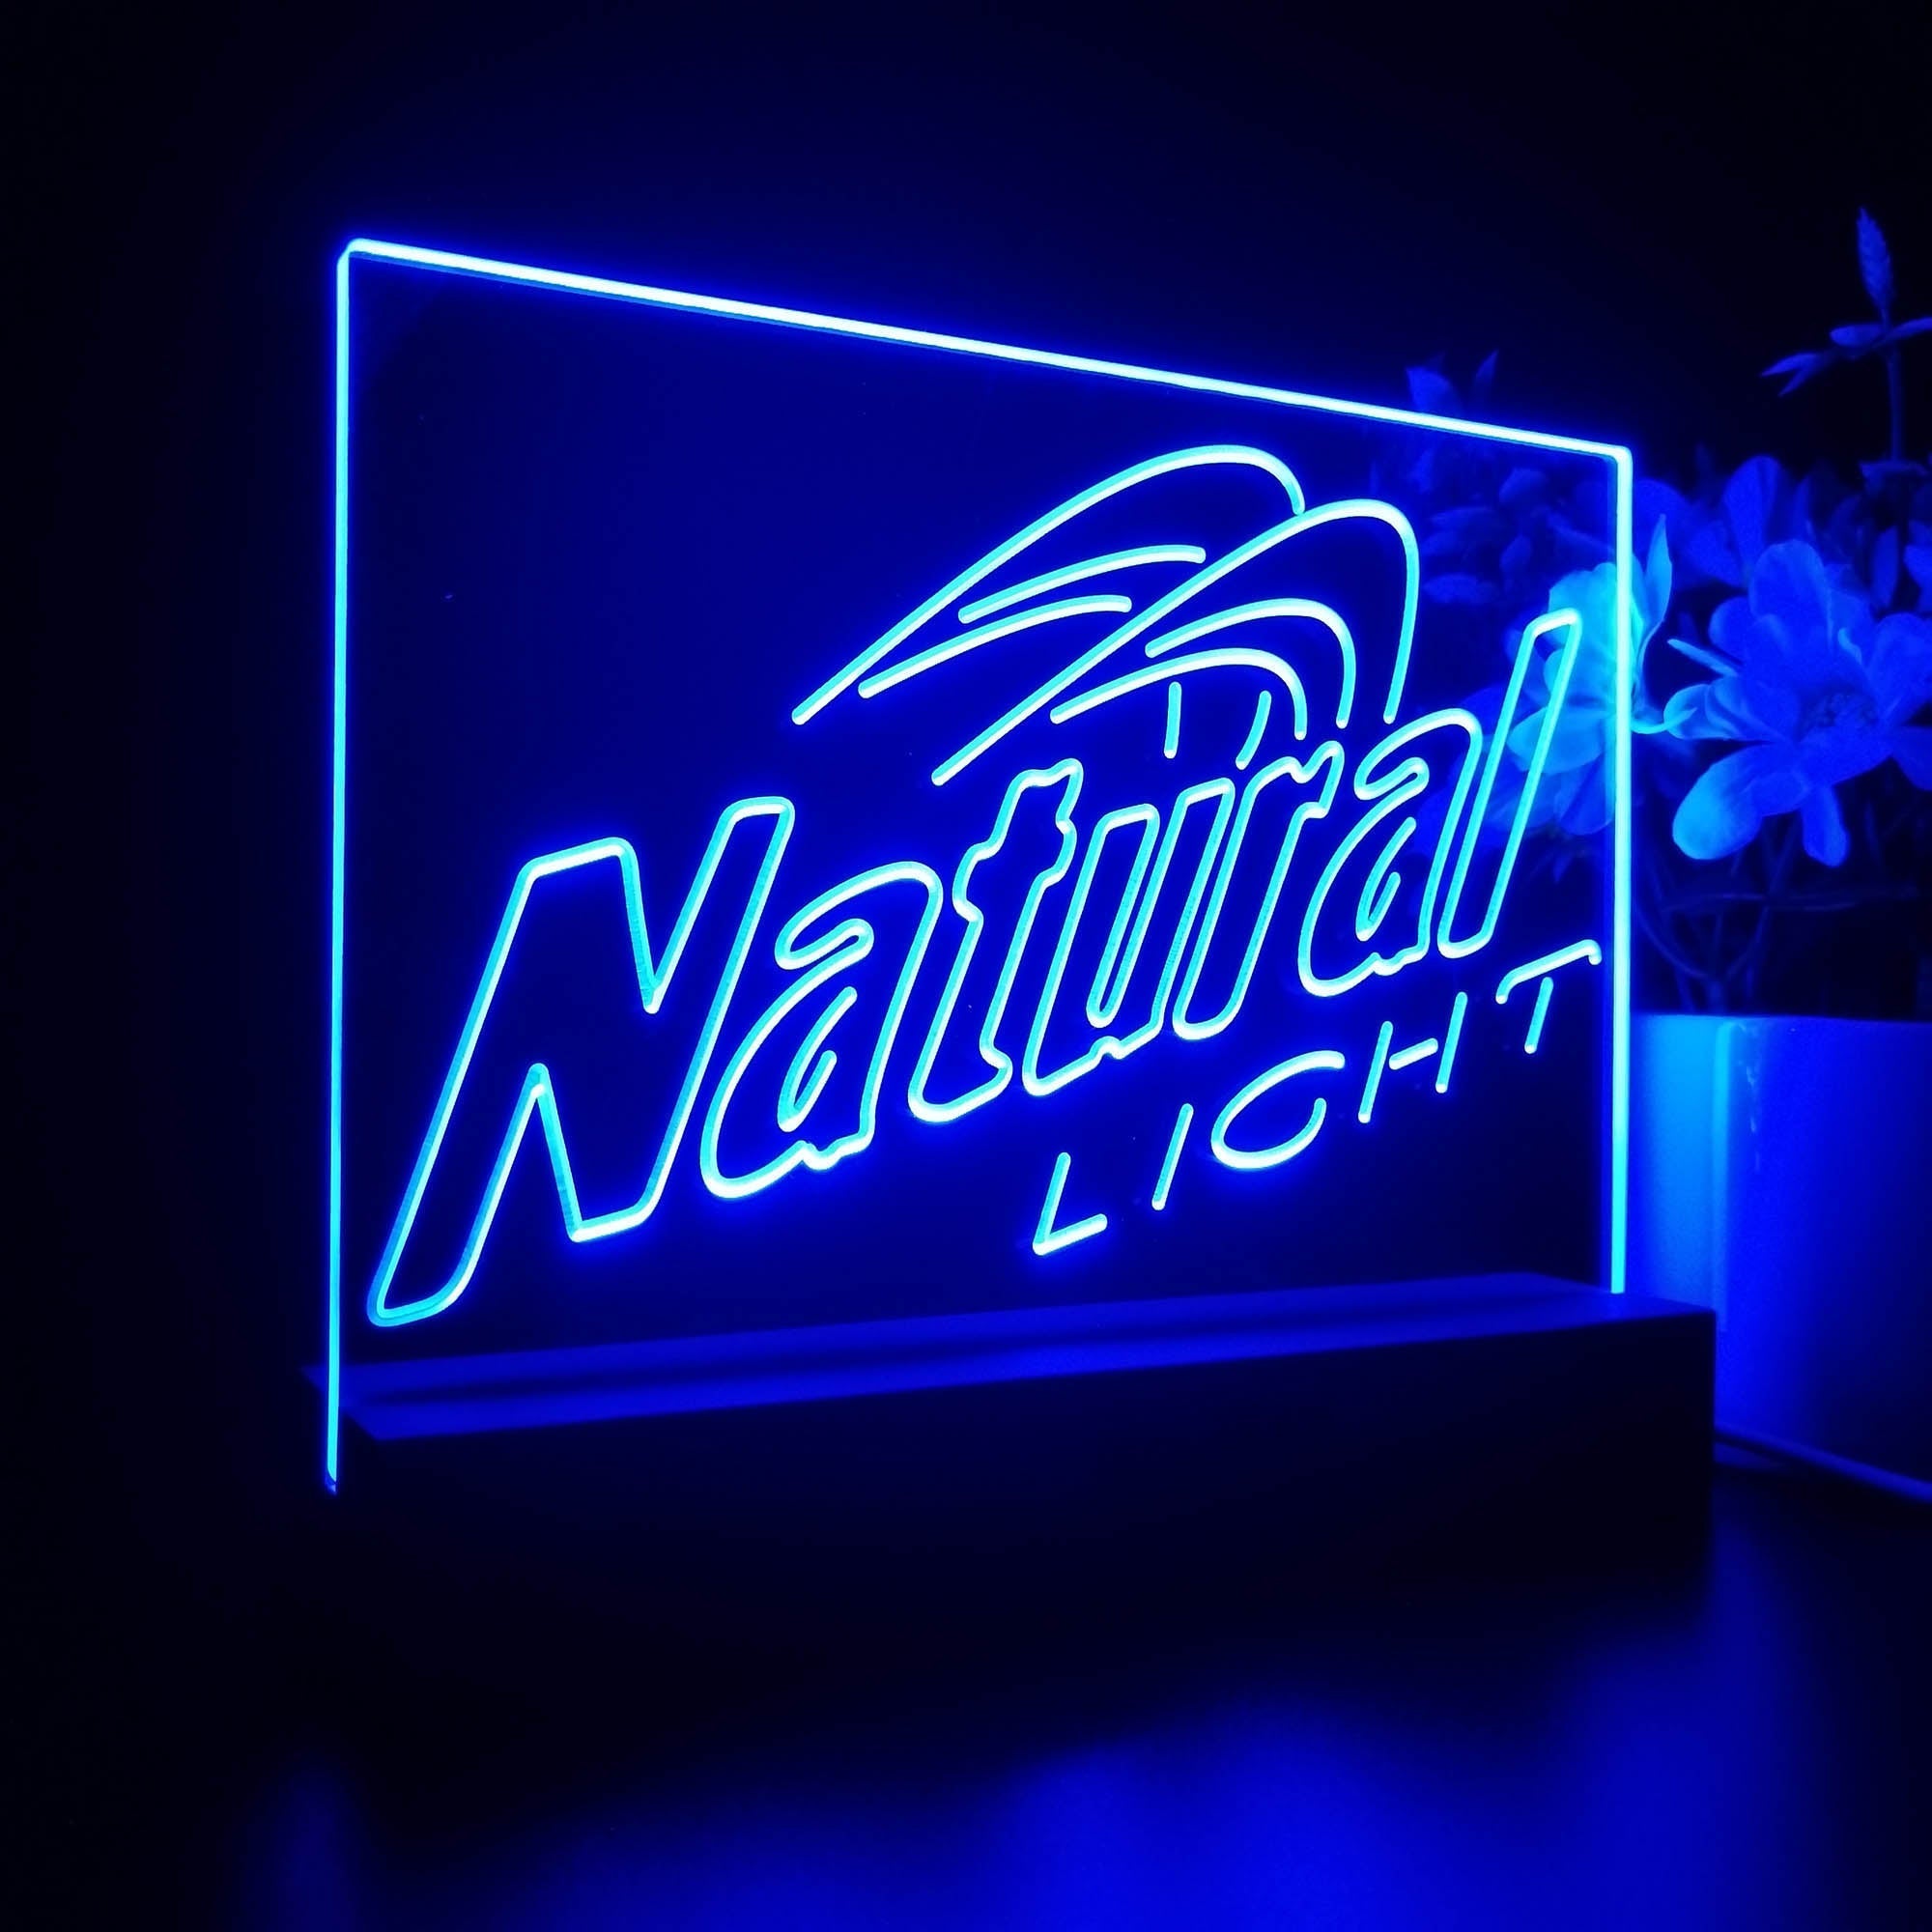 Natural Light Beer Neon Sign Pub Bar Lamp